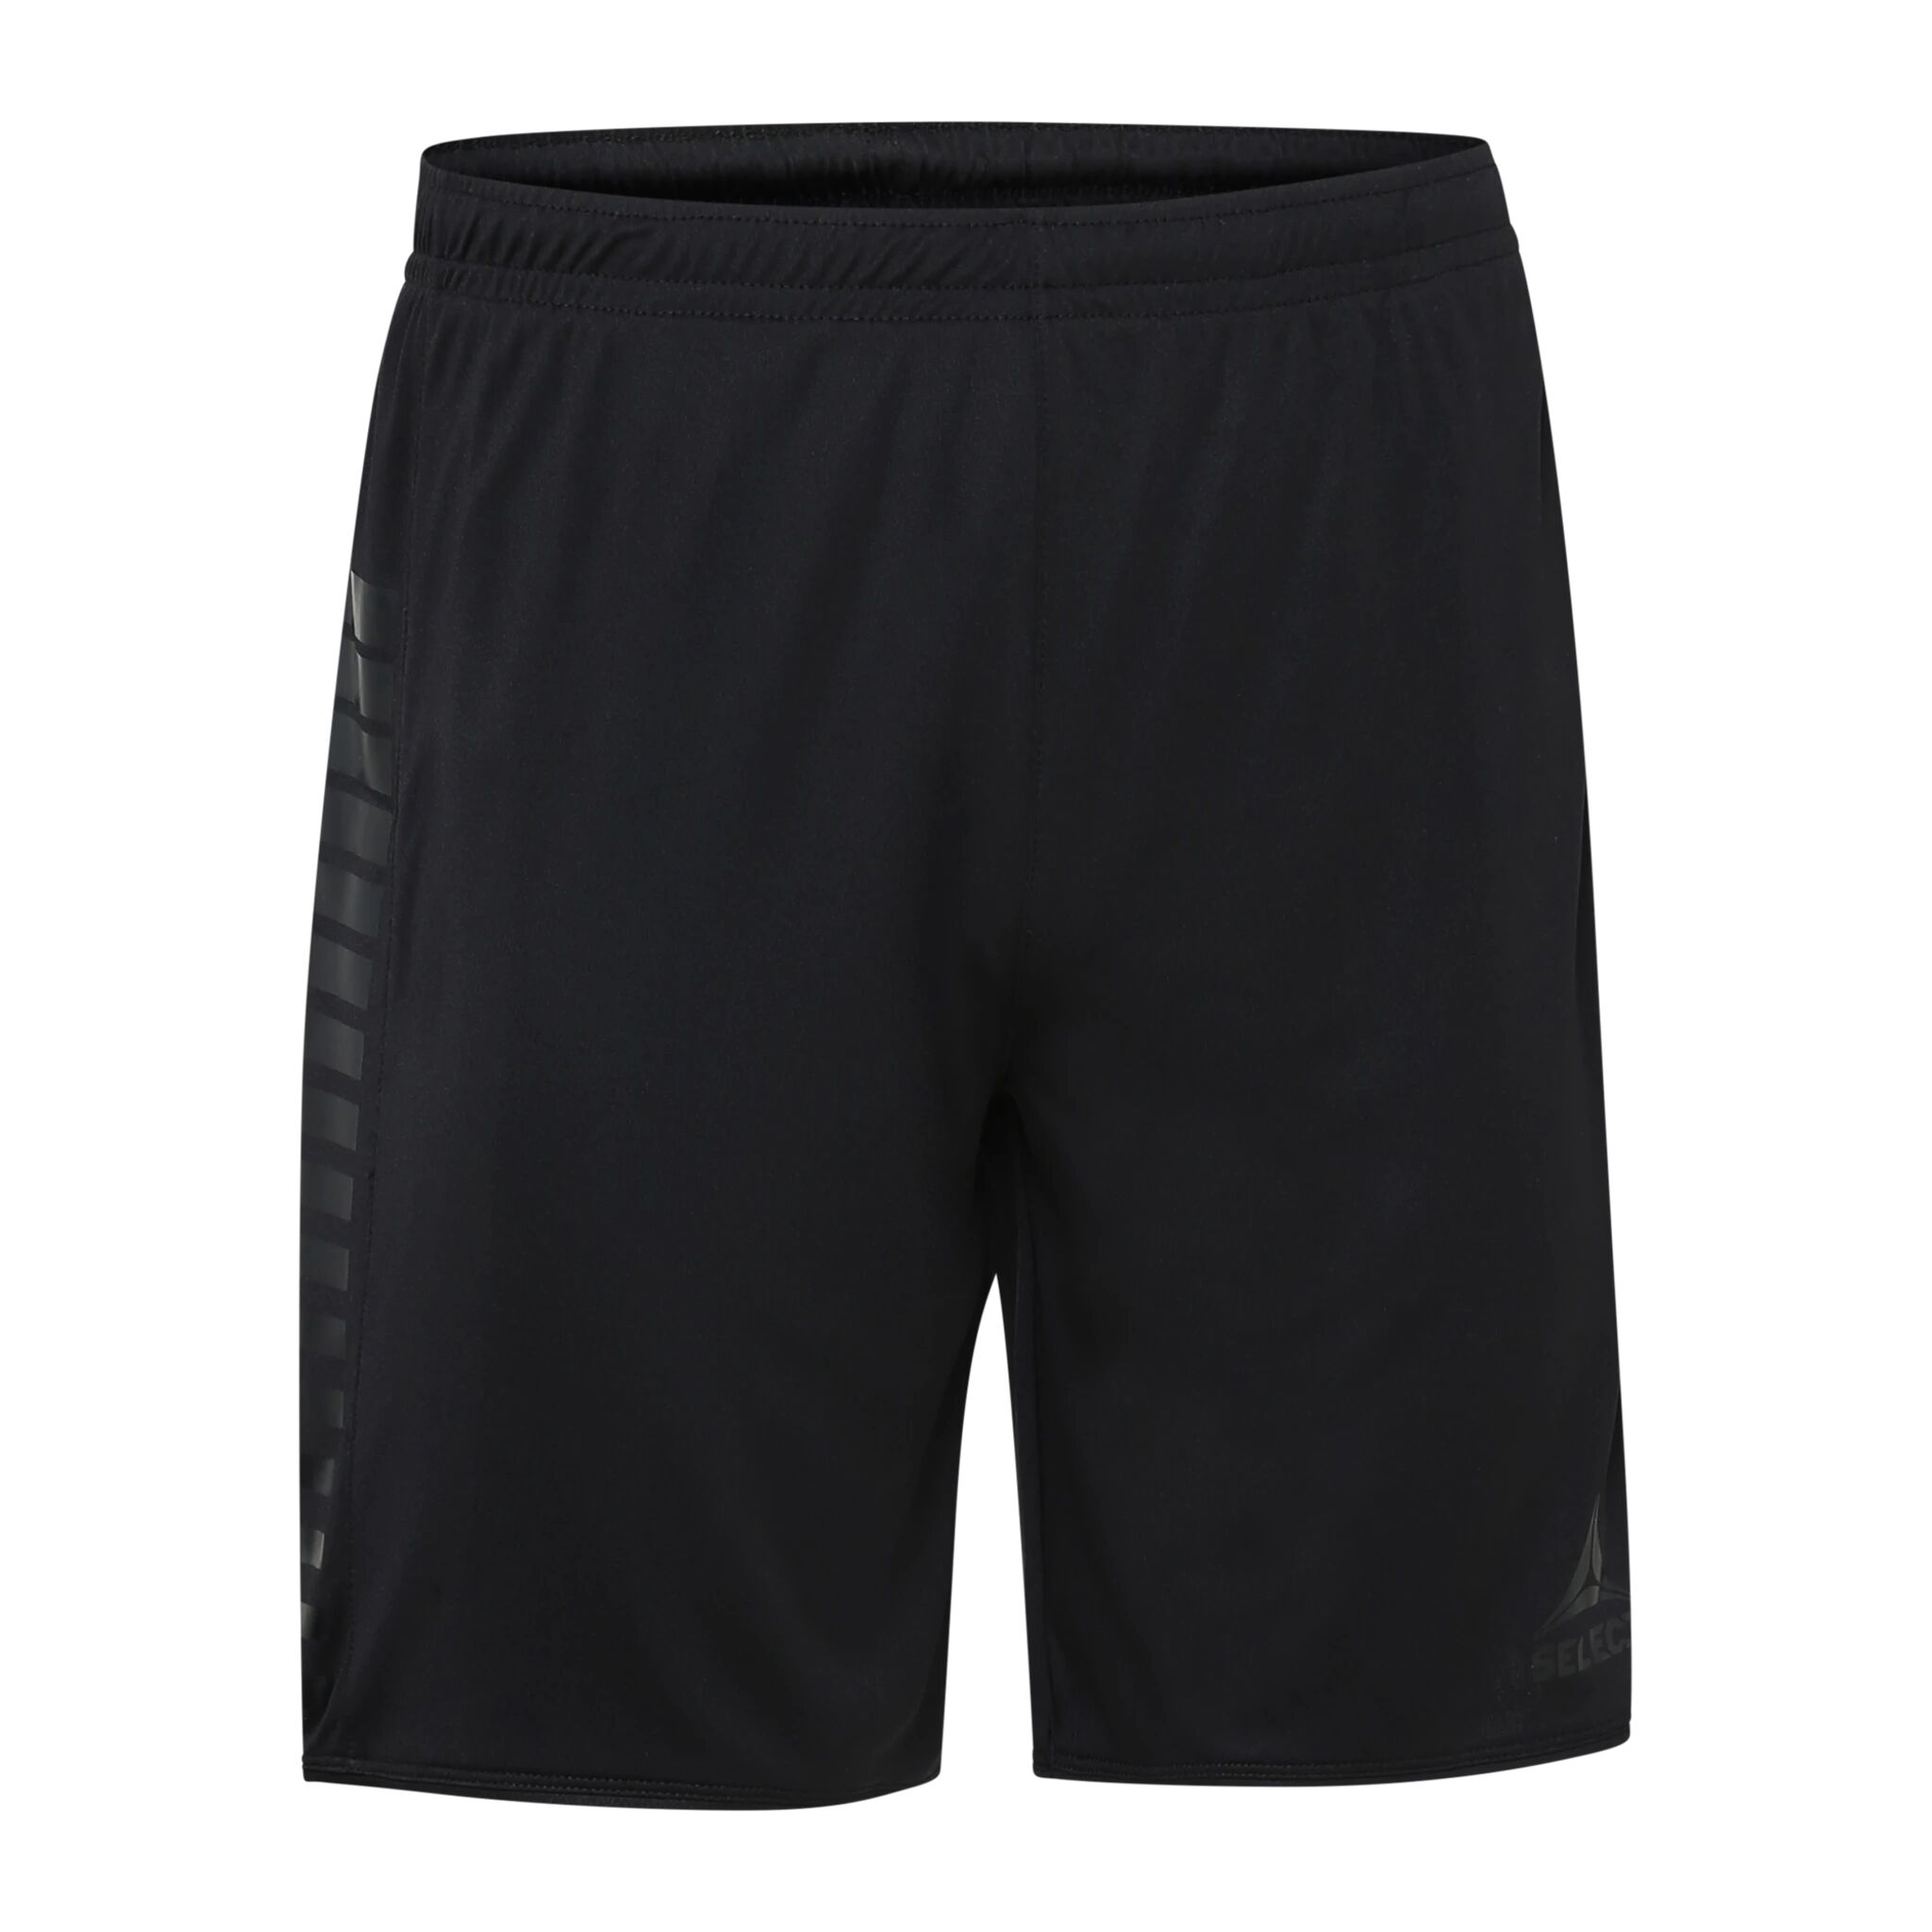 Select Player shorts Argentina, shorts Junior/Senior M BLACK/BLACK